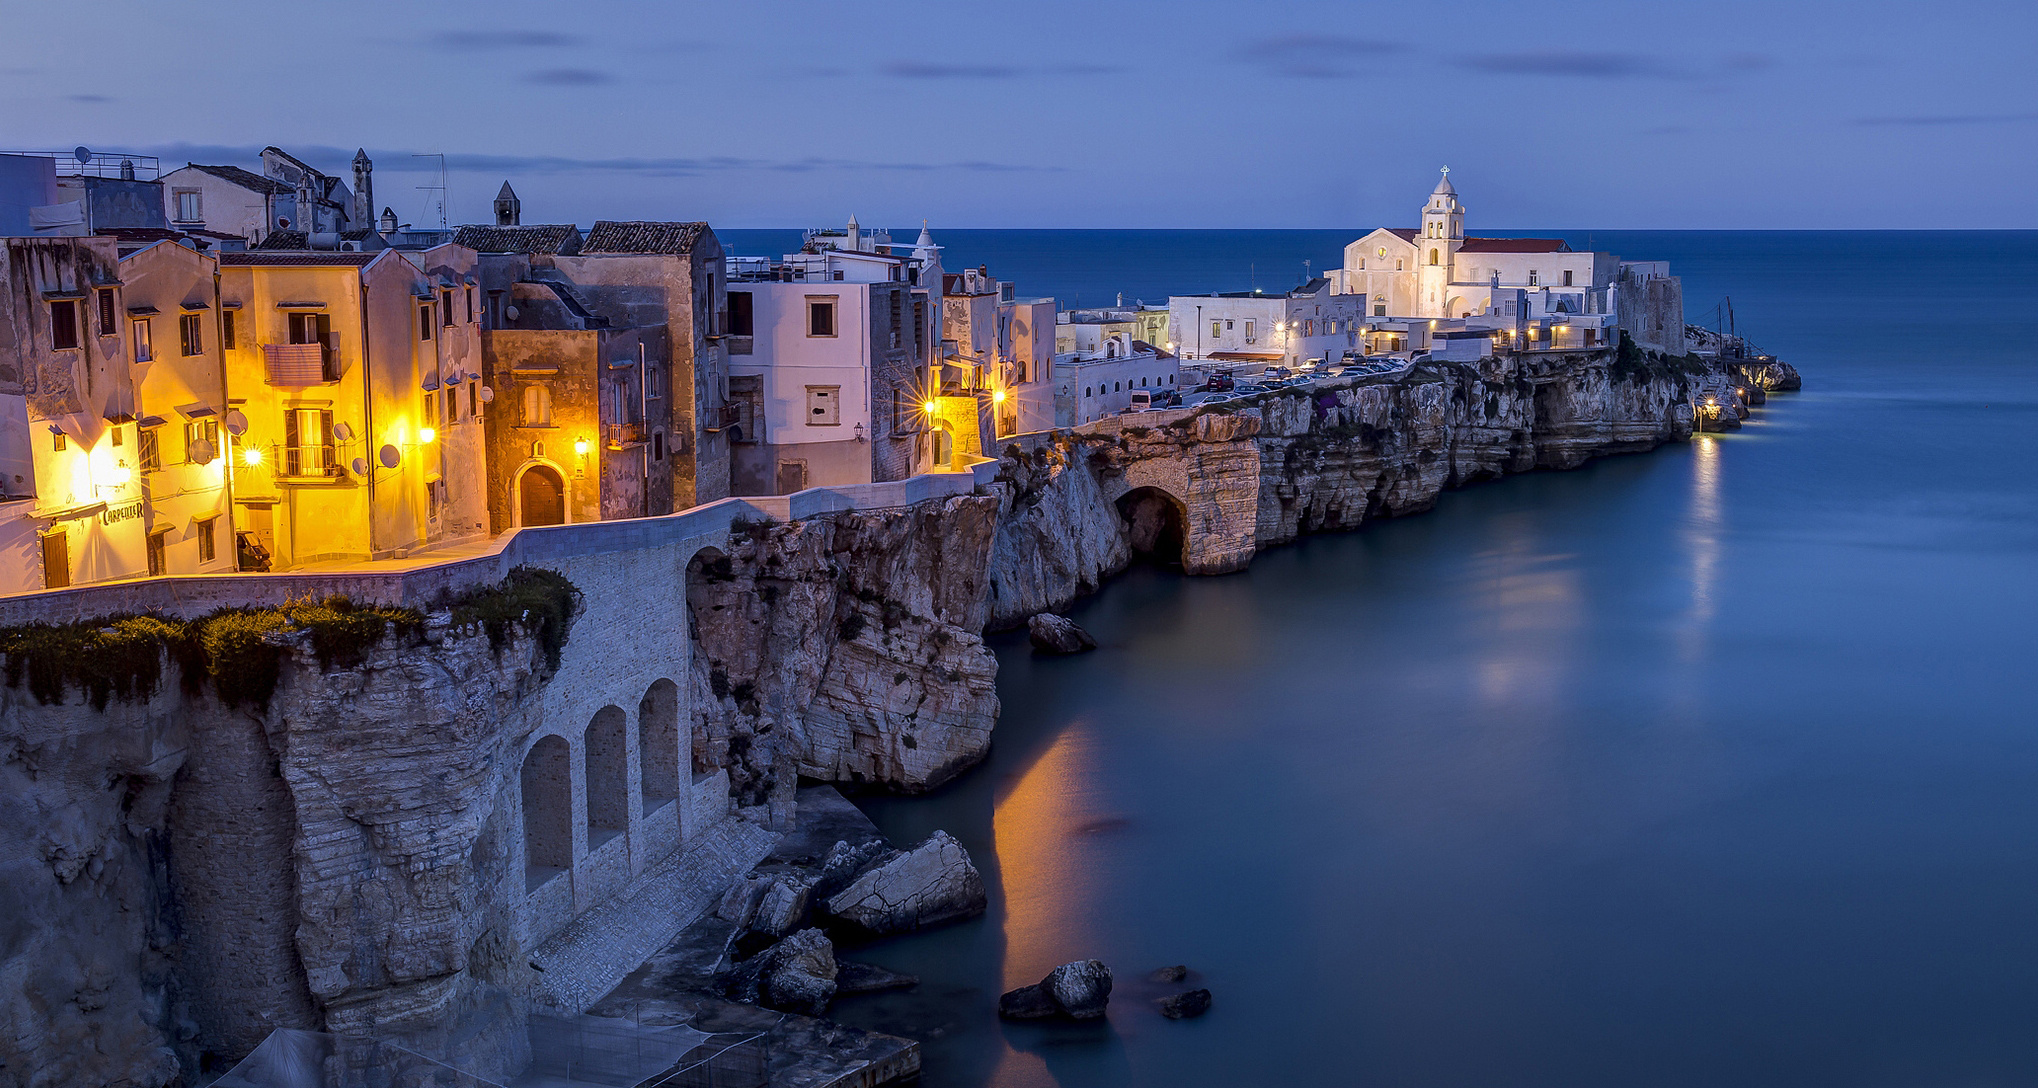 Adriatic Sea, HD wallpapers, Breathtaking views, Stunning landscapes, 2040x1090 HD Desktop